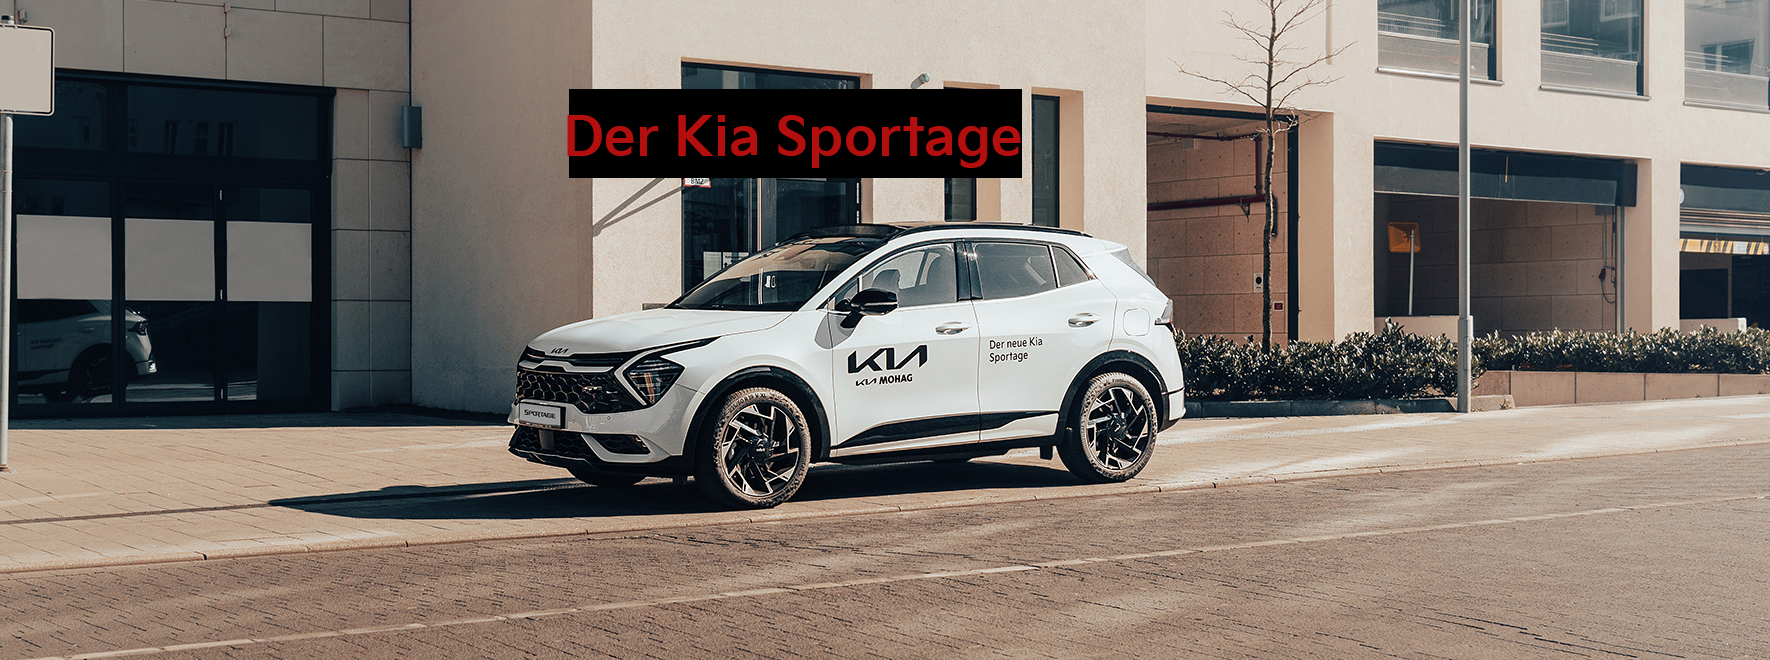 Kia Sportage | 1.6 T-GDI Vision, 110 kW (150 PS), 6-Gang-Schaltgetriebe